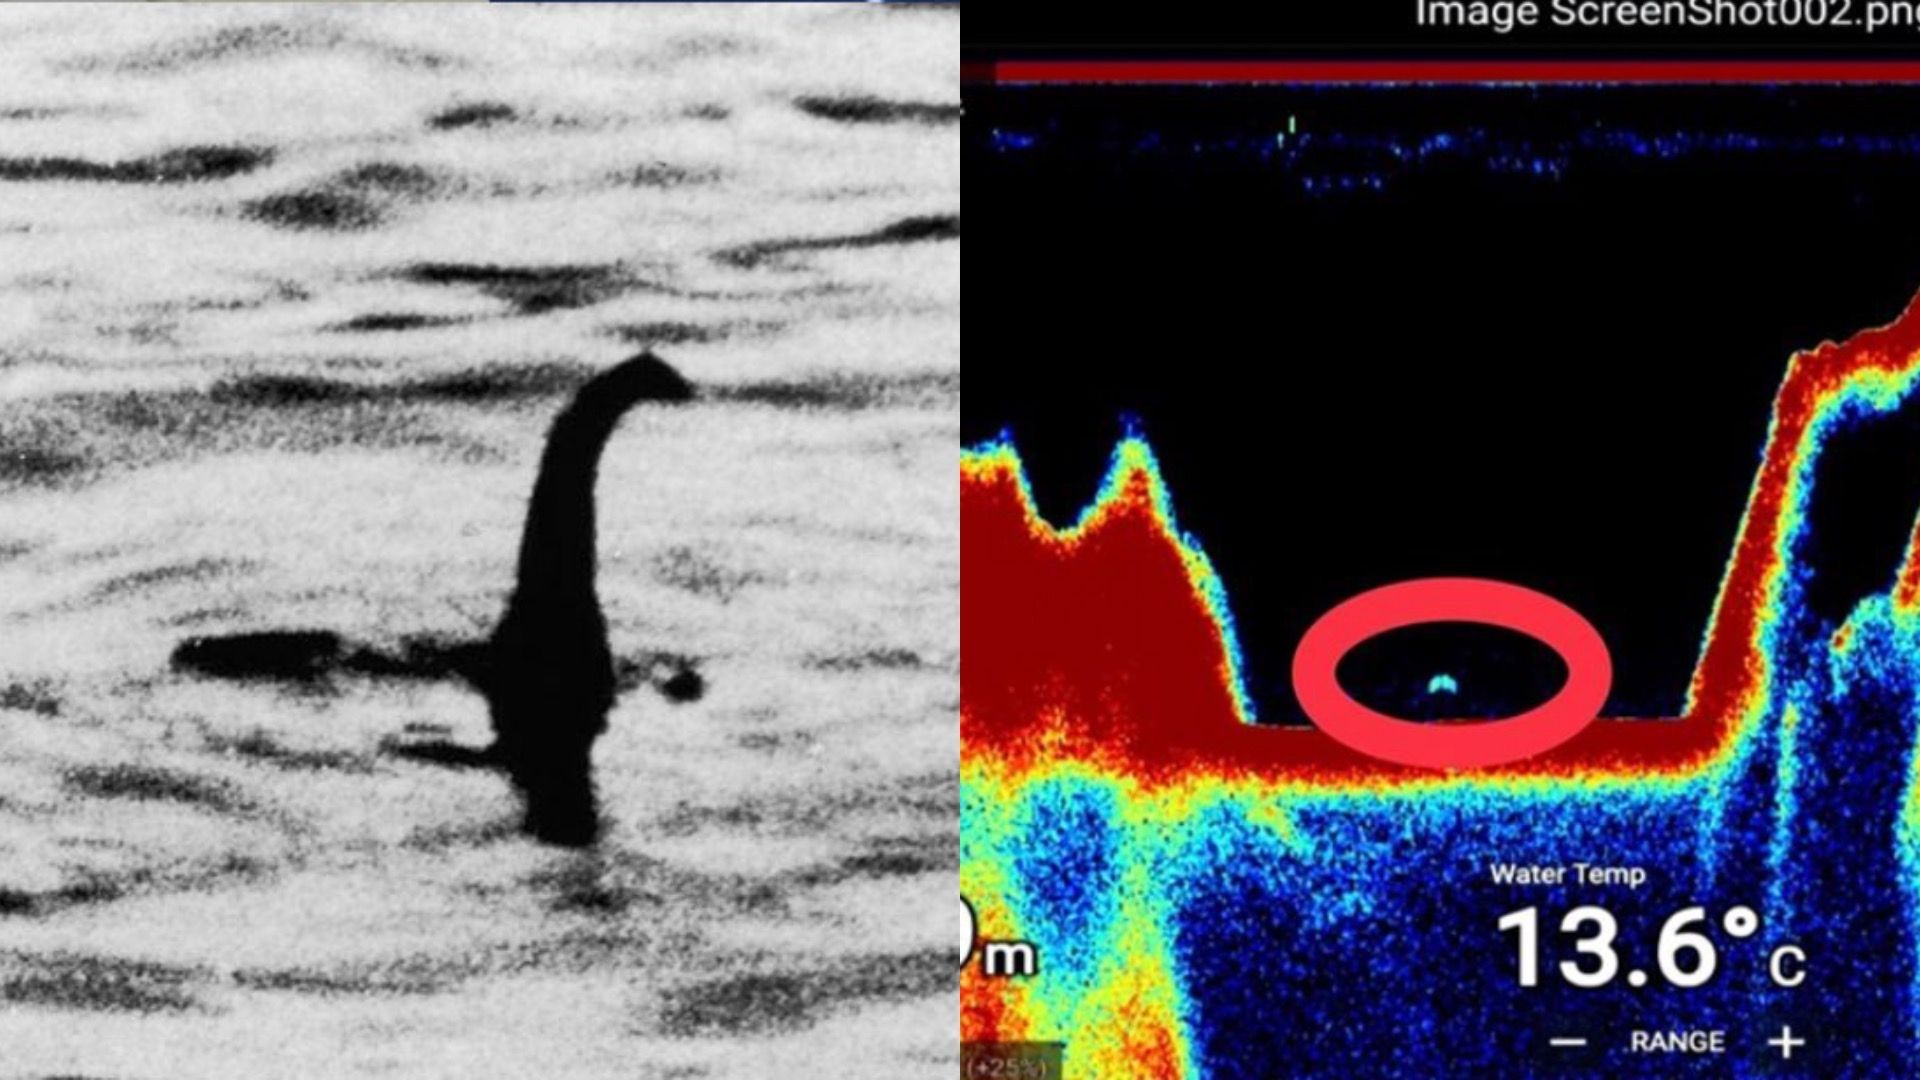 El monstruo del Lago Ness: Detectan una extraña forma bajo el agua - Vandal  Random